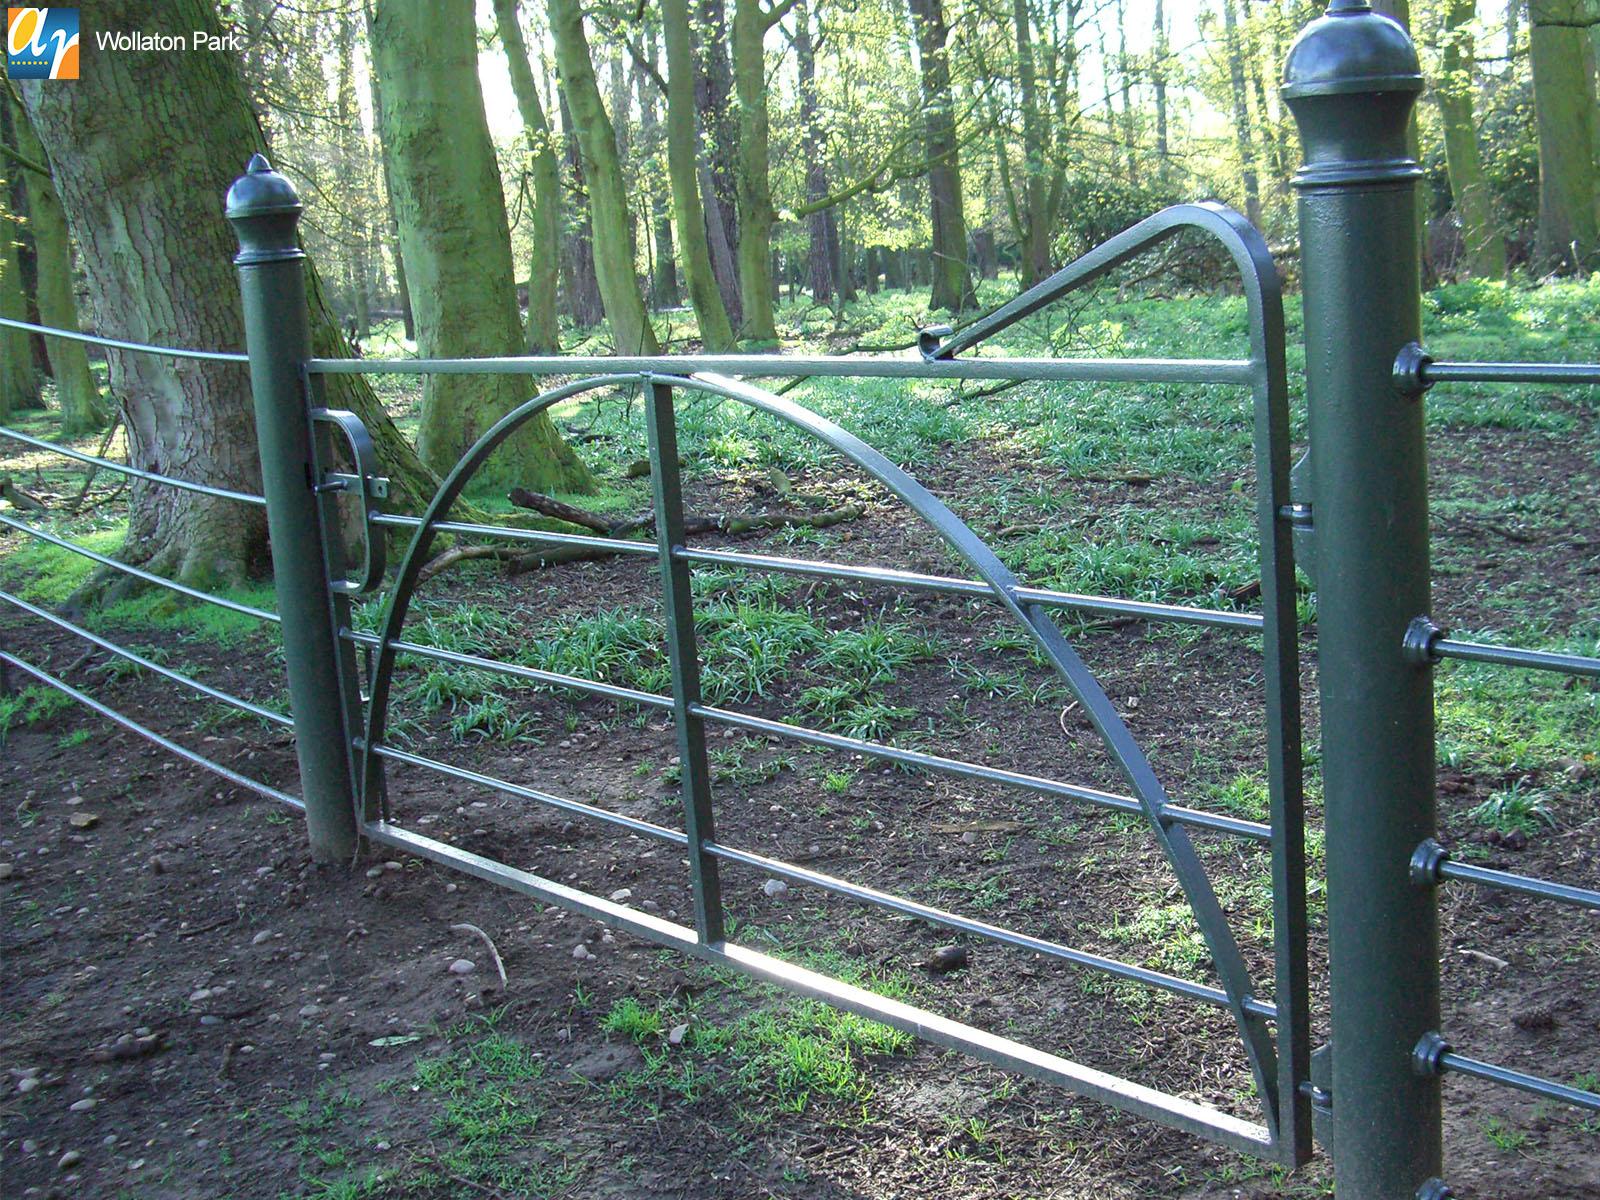 Wollaton Park metal railings and gates